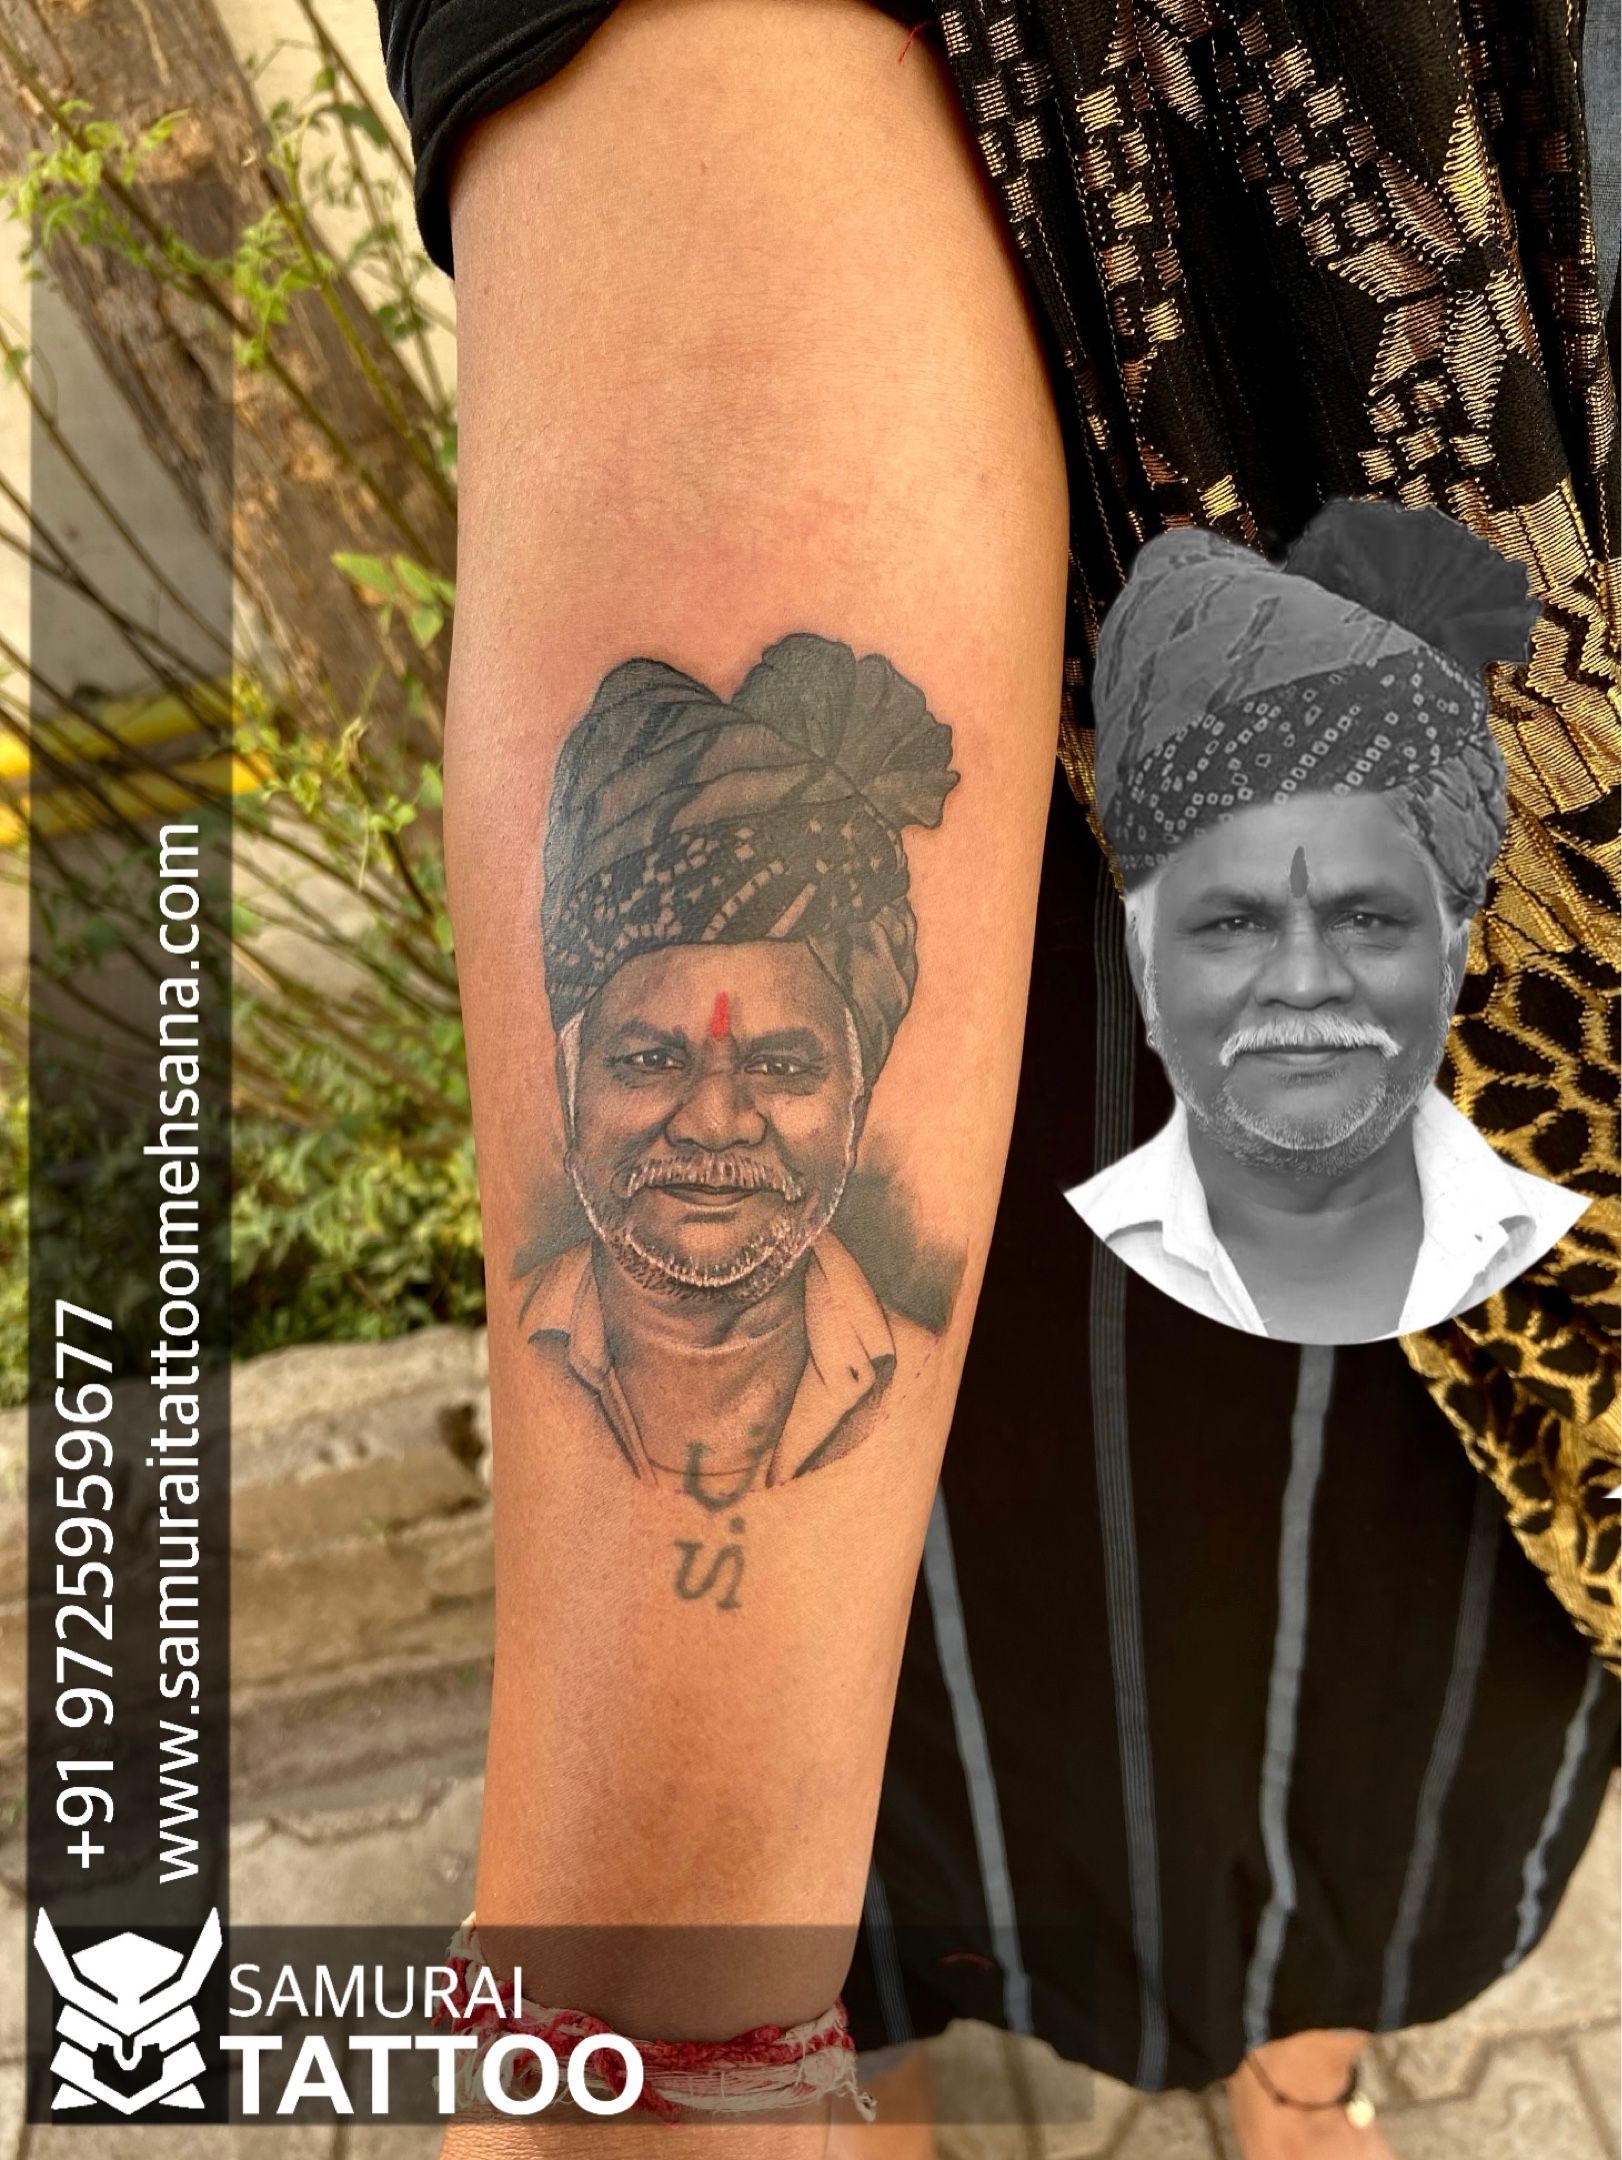 MILESIX Tattoo Studio - done by @ronnytaptoe A start for the 2021 ..  thanks! #portrait #tattoos #tattoo #blackandgreytattoo #milesixtattoostudio  | Facebook